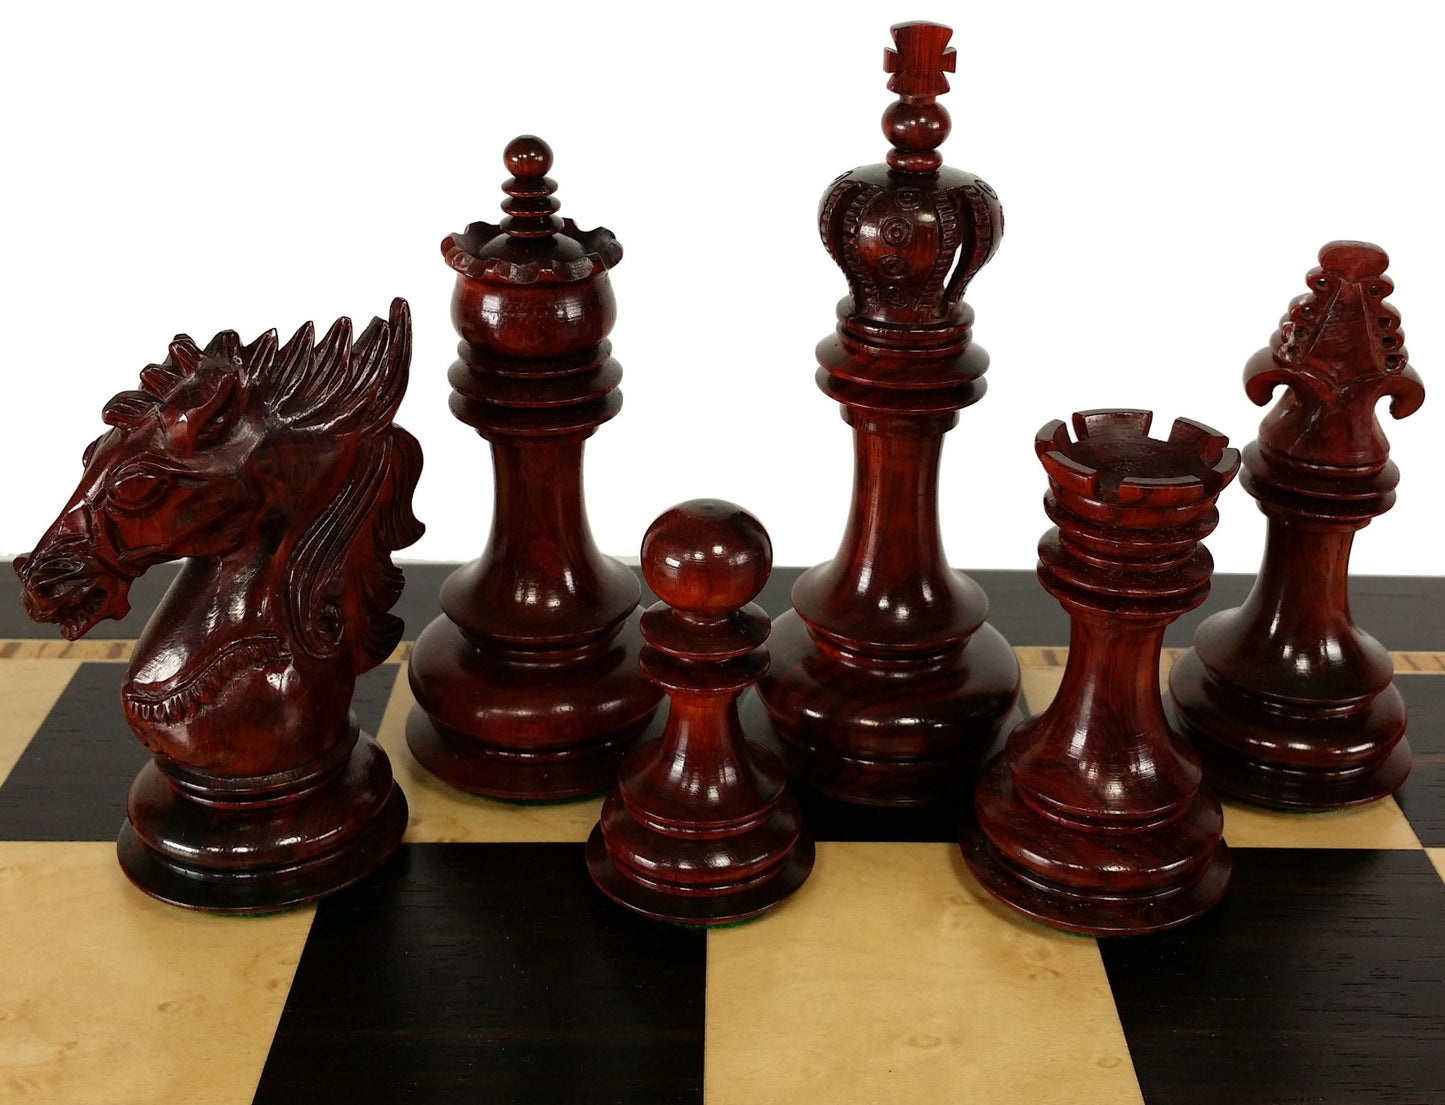 BLOOD ROSEWOOD DRAGON 4 5/8" Large Staunton Chess Set W 20" Ebony Board